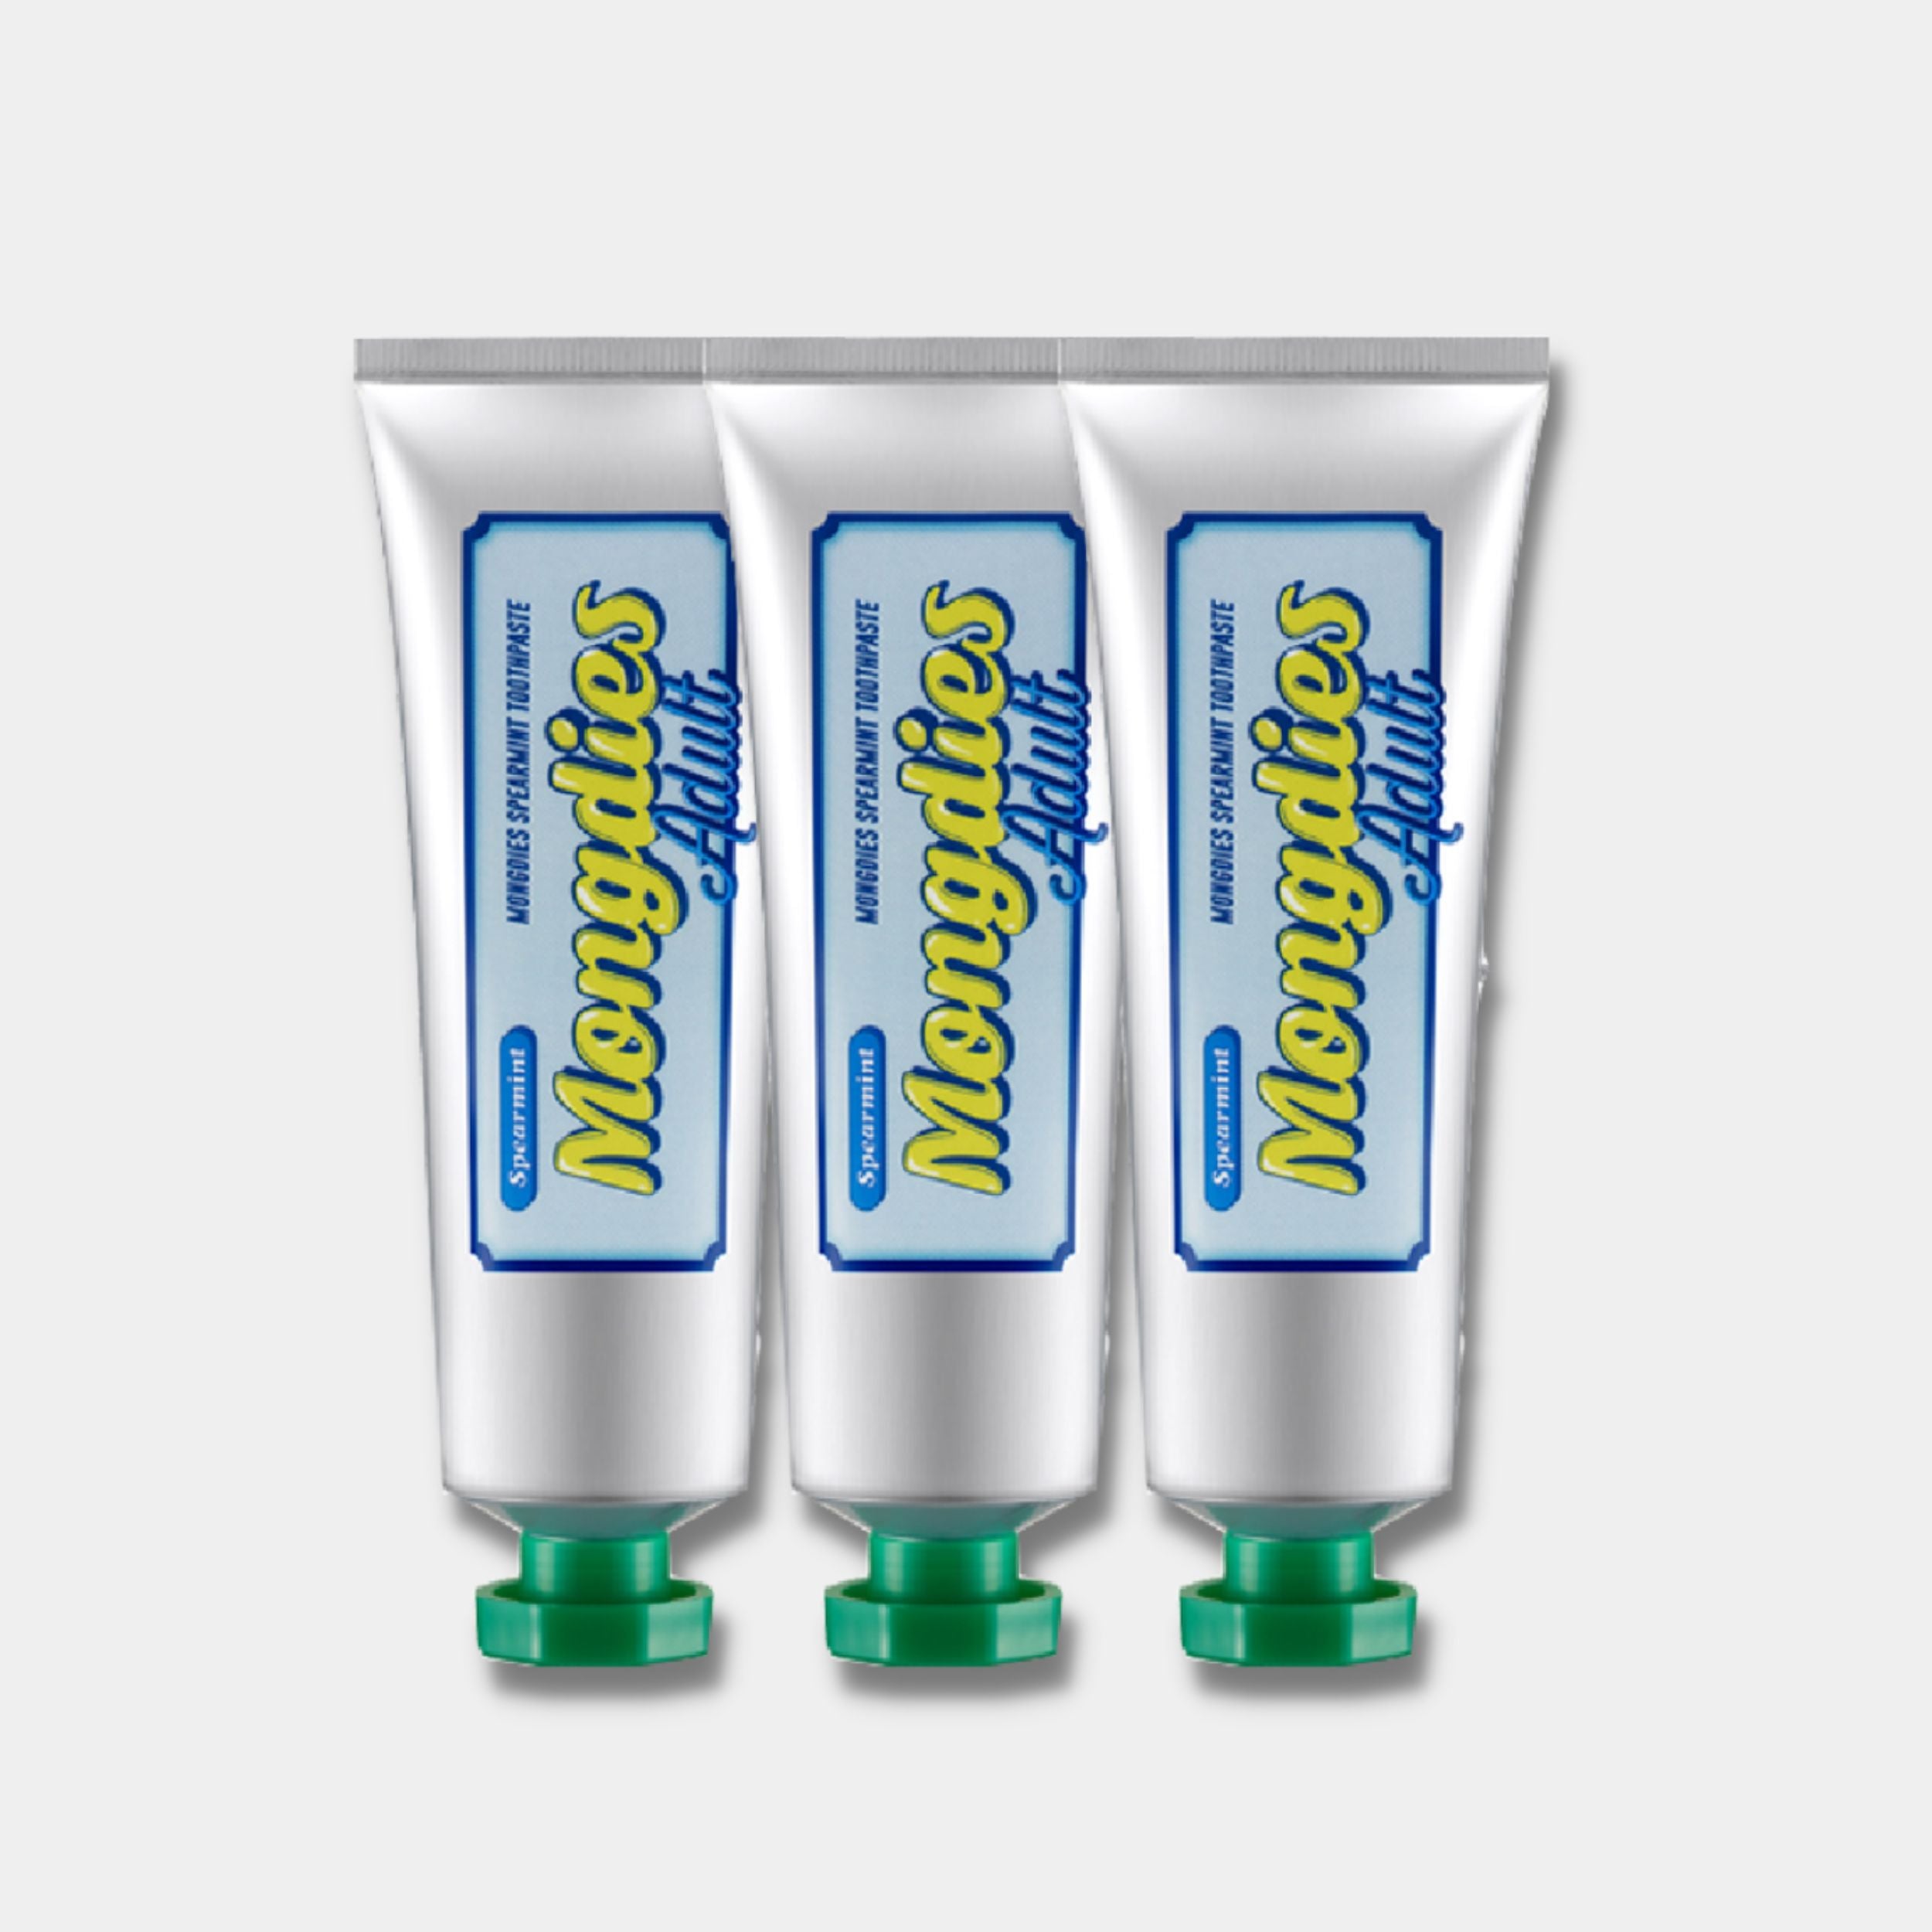 Adult Toothpaste [3 Set]-100g